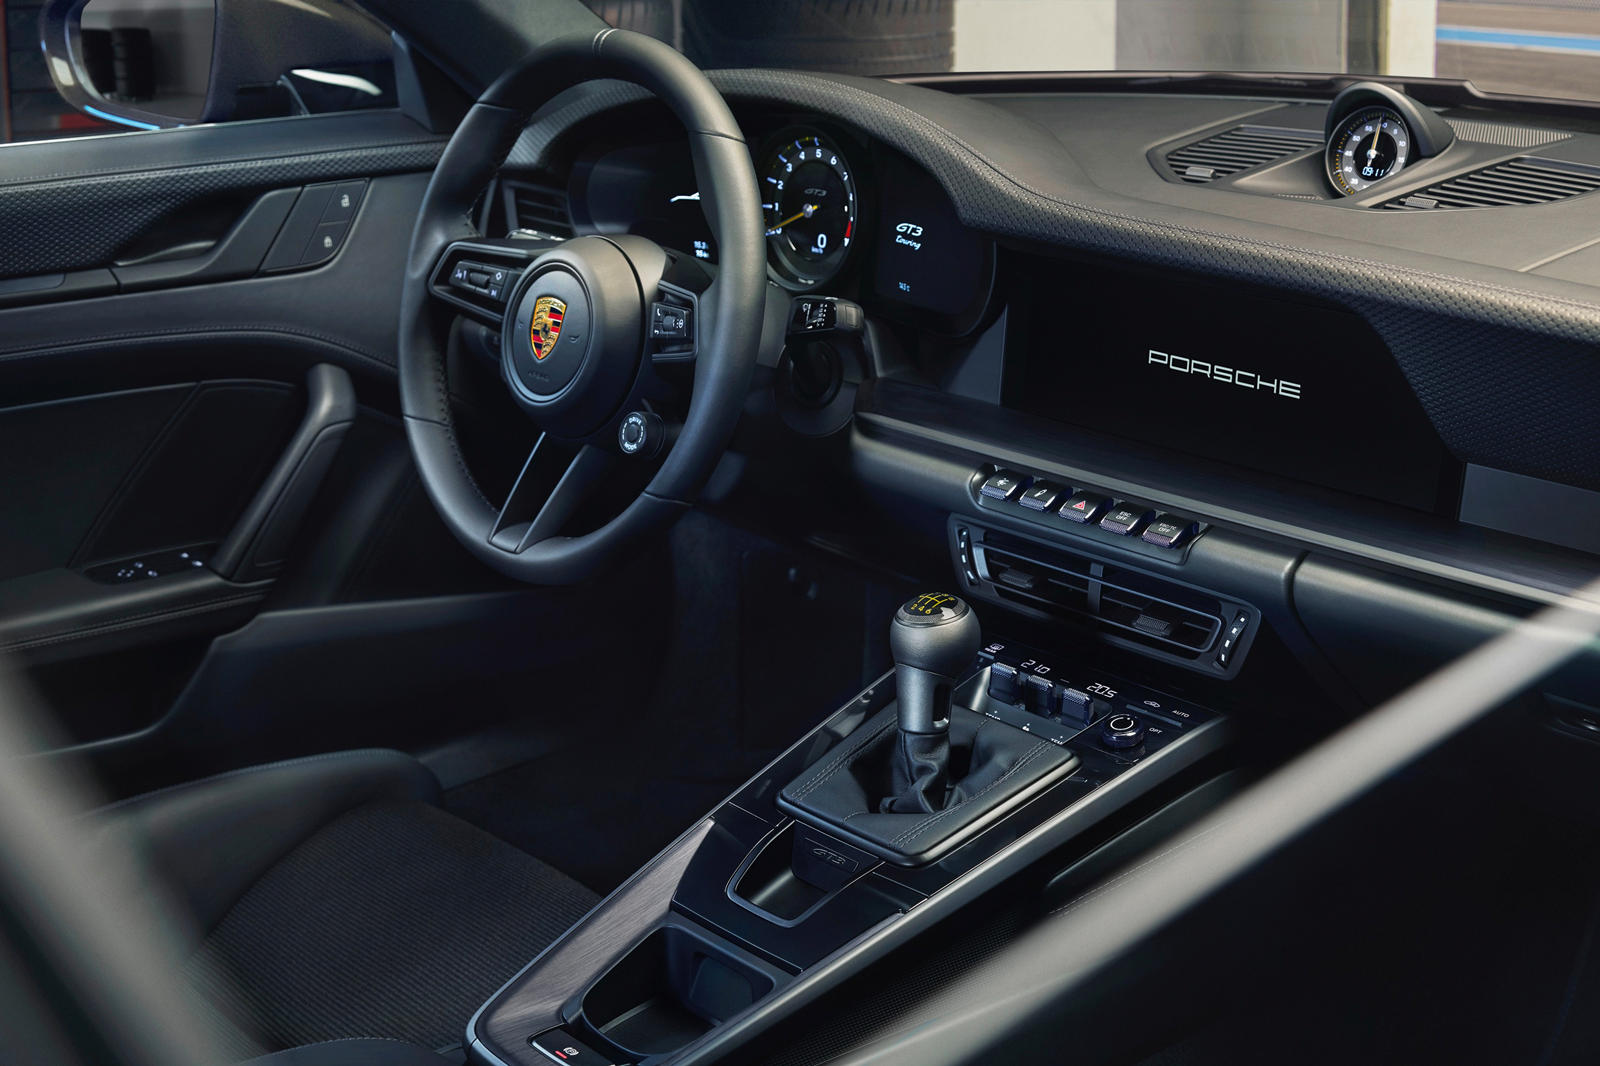 Interior Design of the Porsche 911 GT3